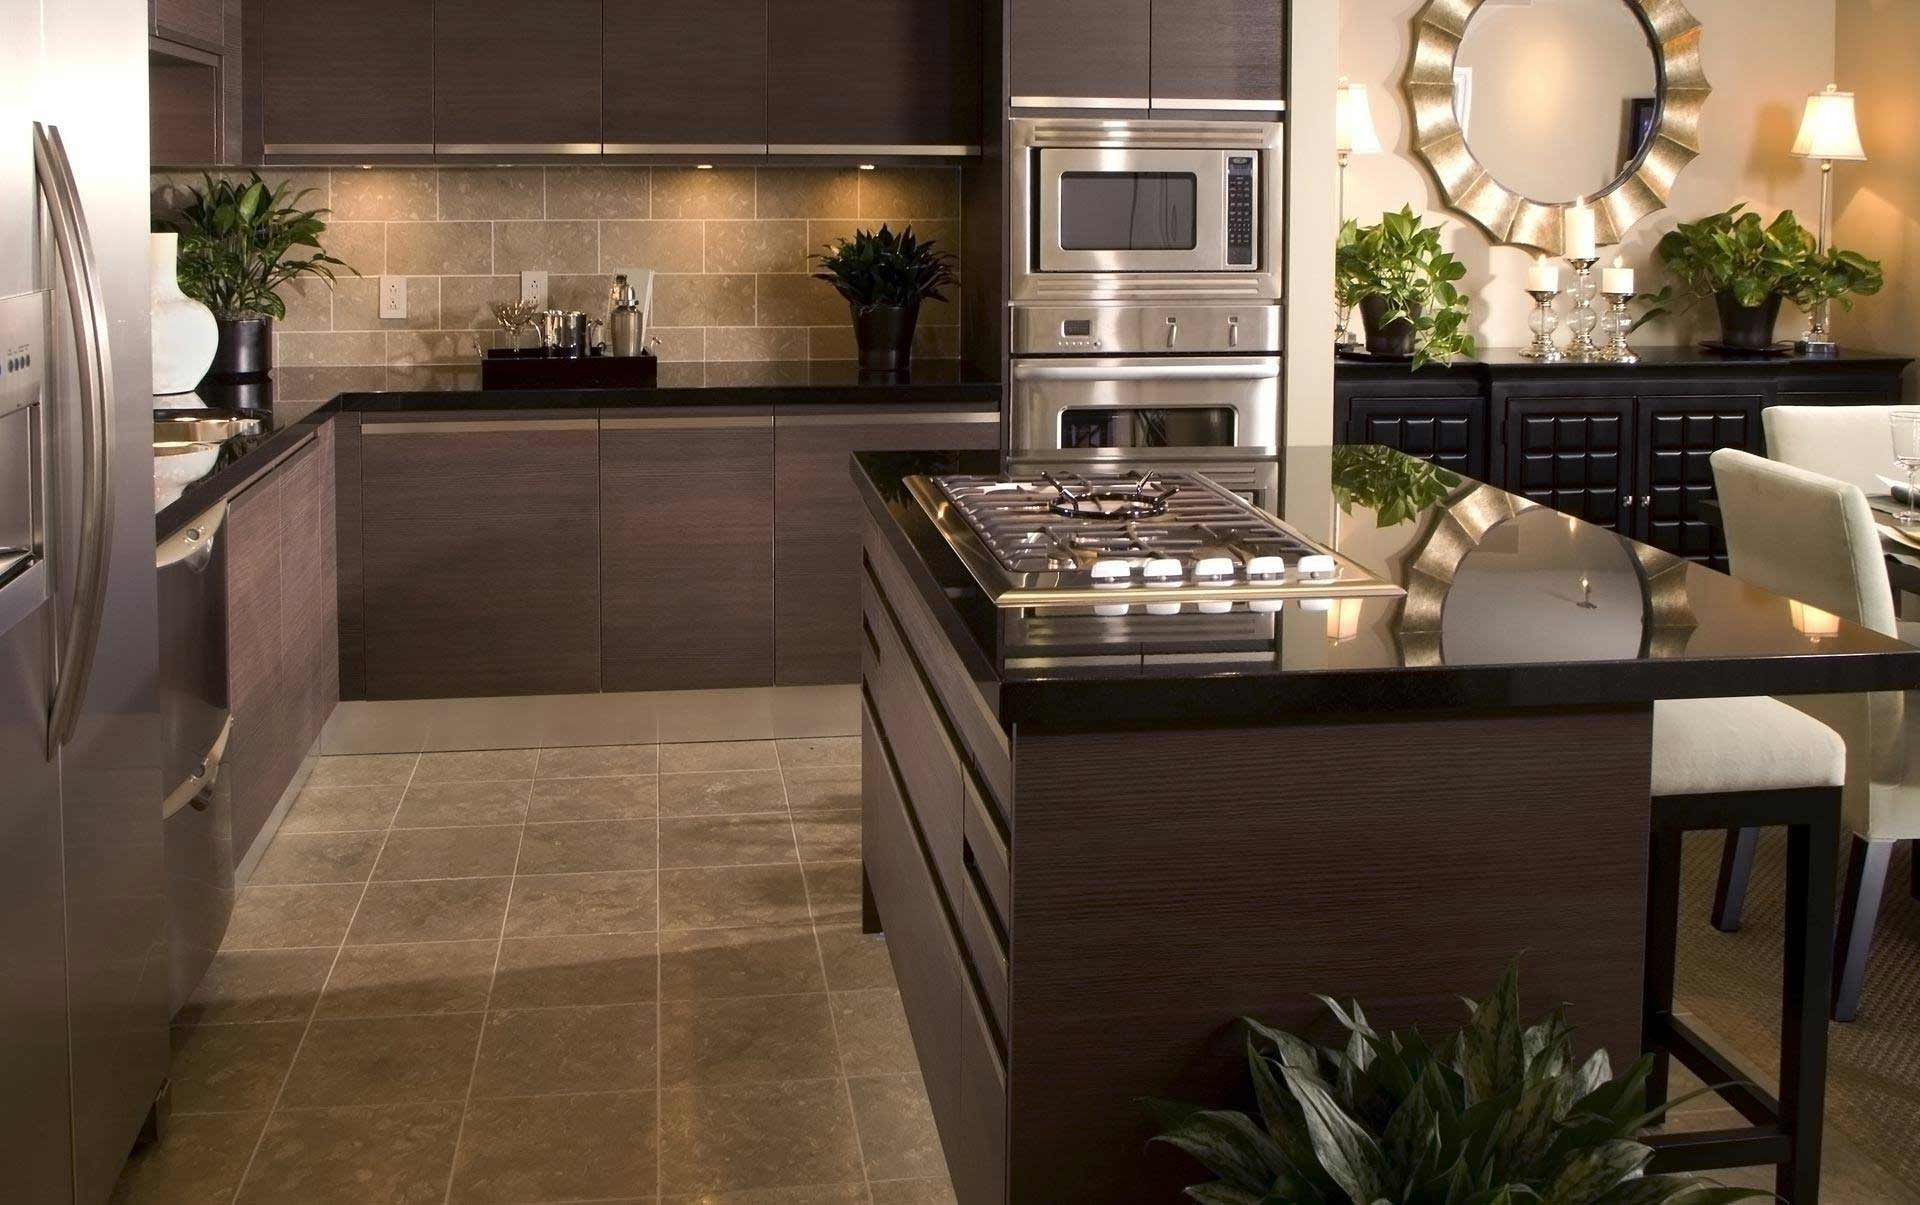 Decorative Kitchen Wall Tiles
 Top 65 Luxury Kitchen Design Ideas Exclusive Gallery